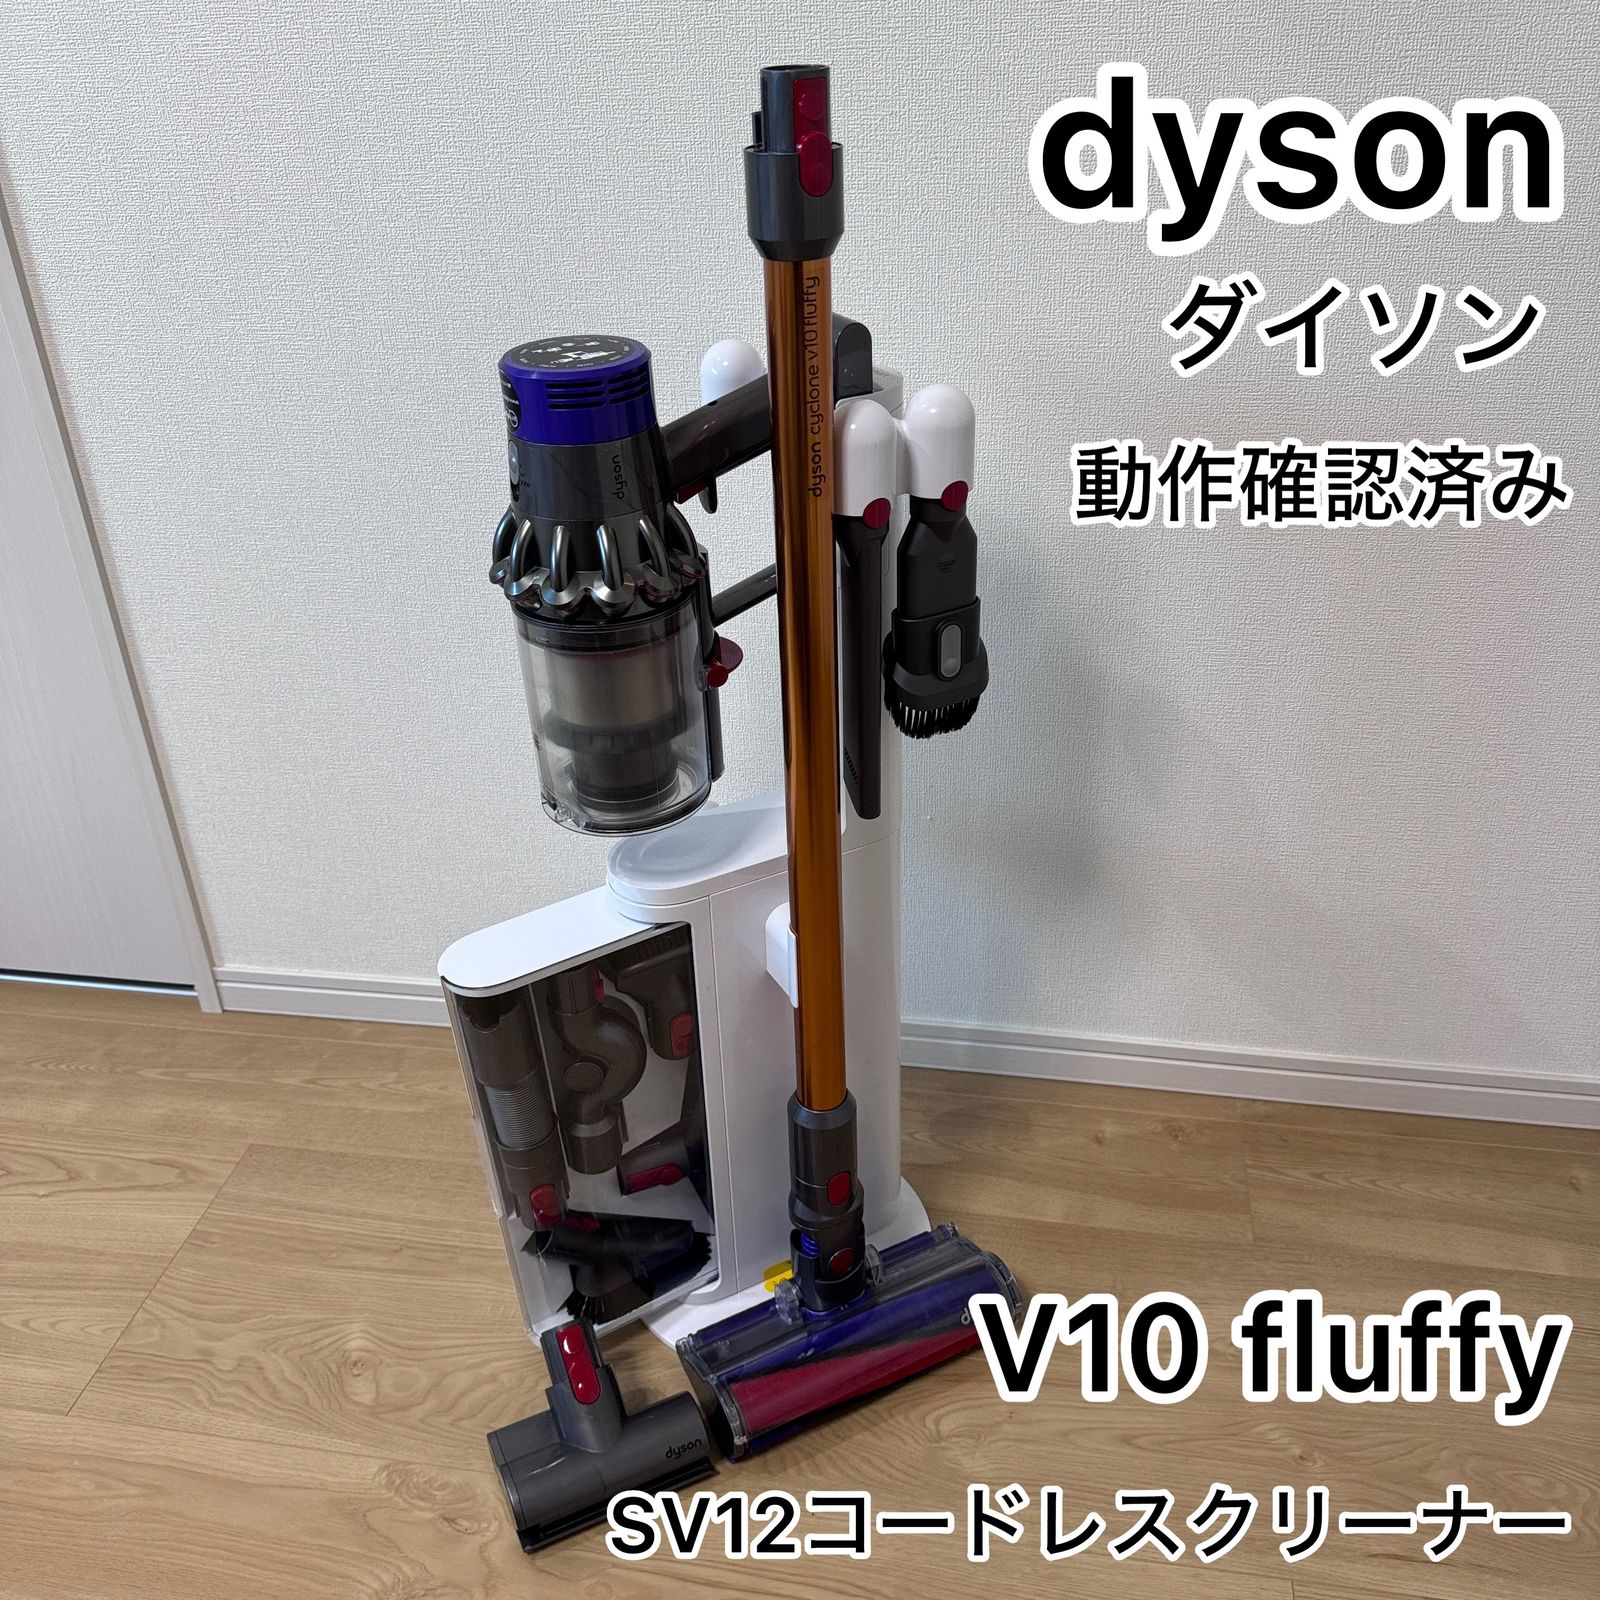 Dyson コードレスクリーナー V10 Fluffy - 掃除機